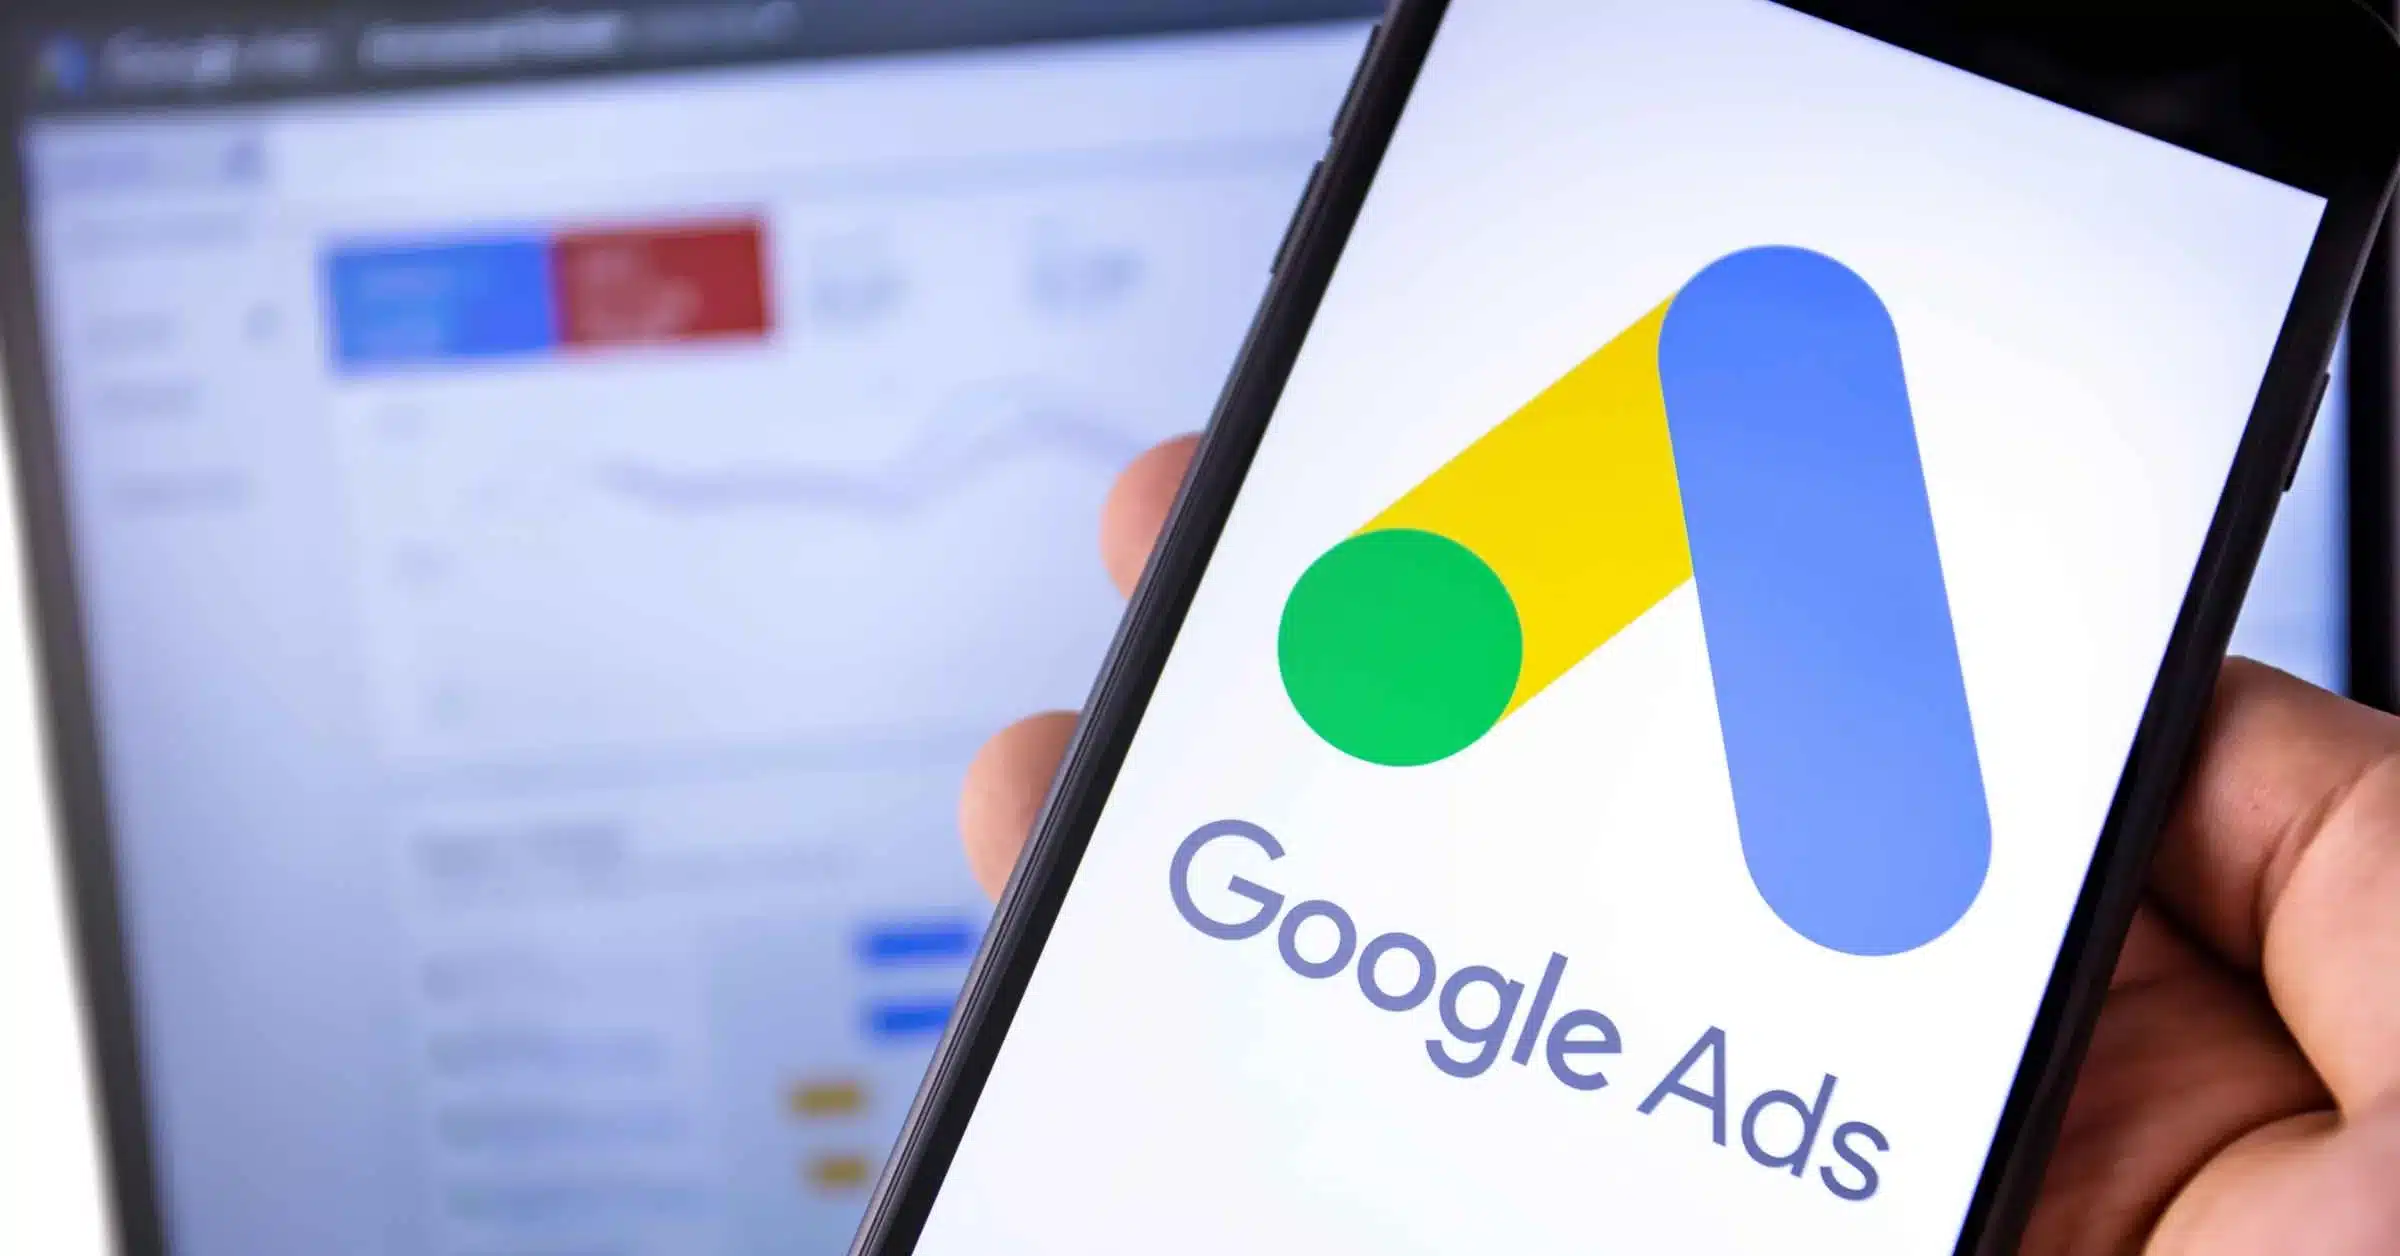 Google ads on a phone